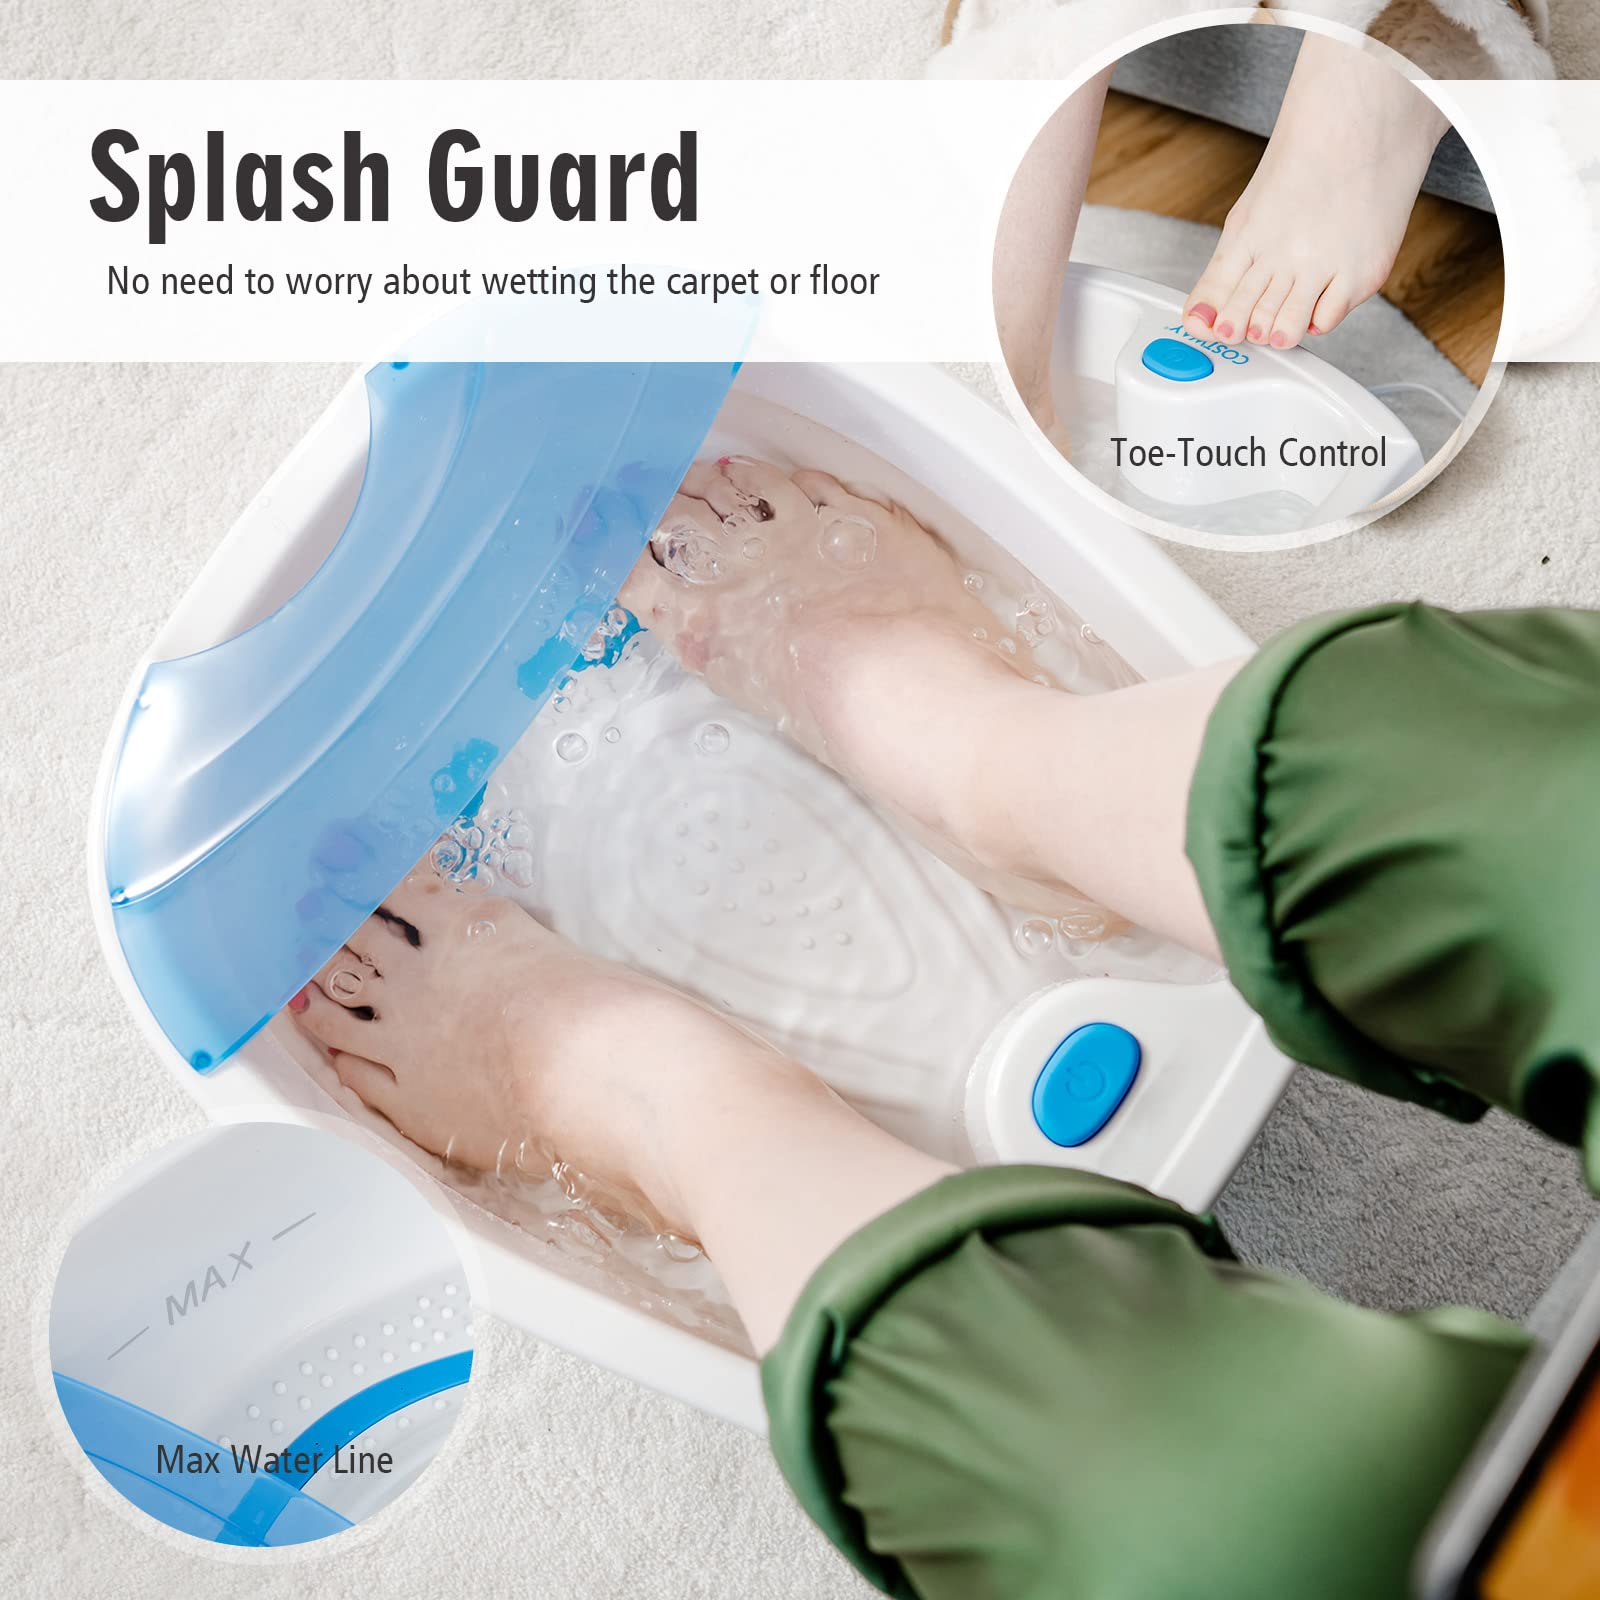 Giantex Foot Spa Bath W/Smooth Bubble Massage